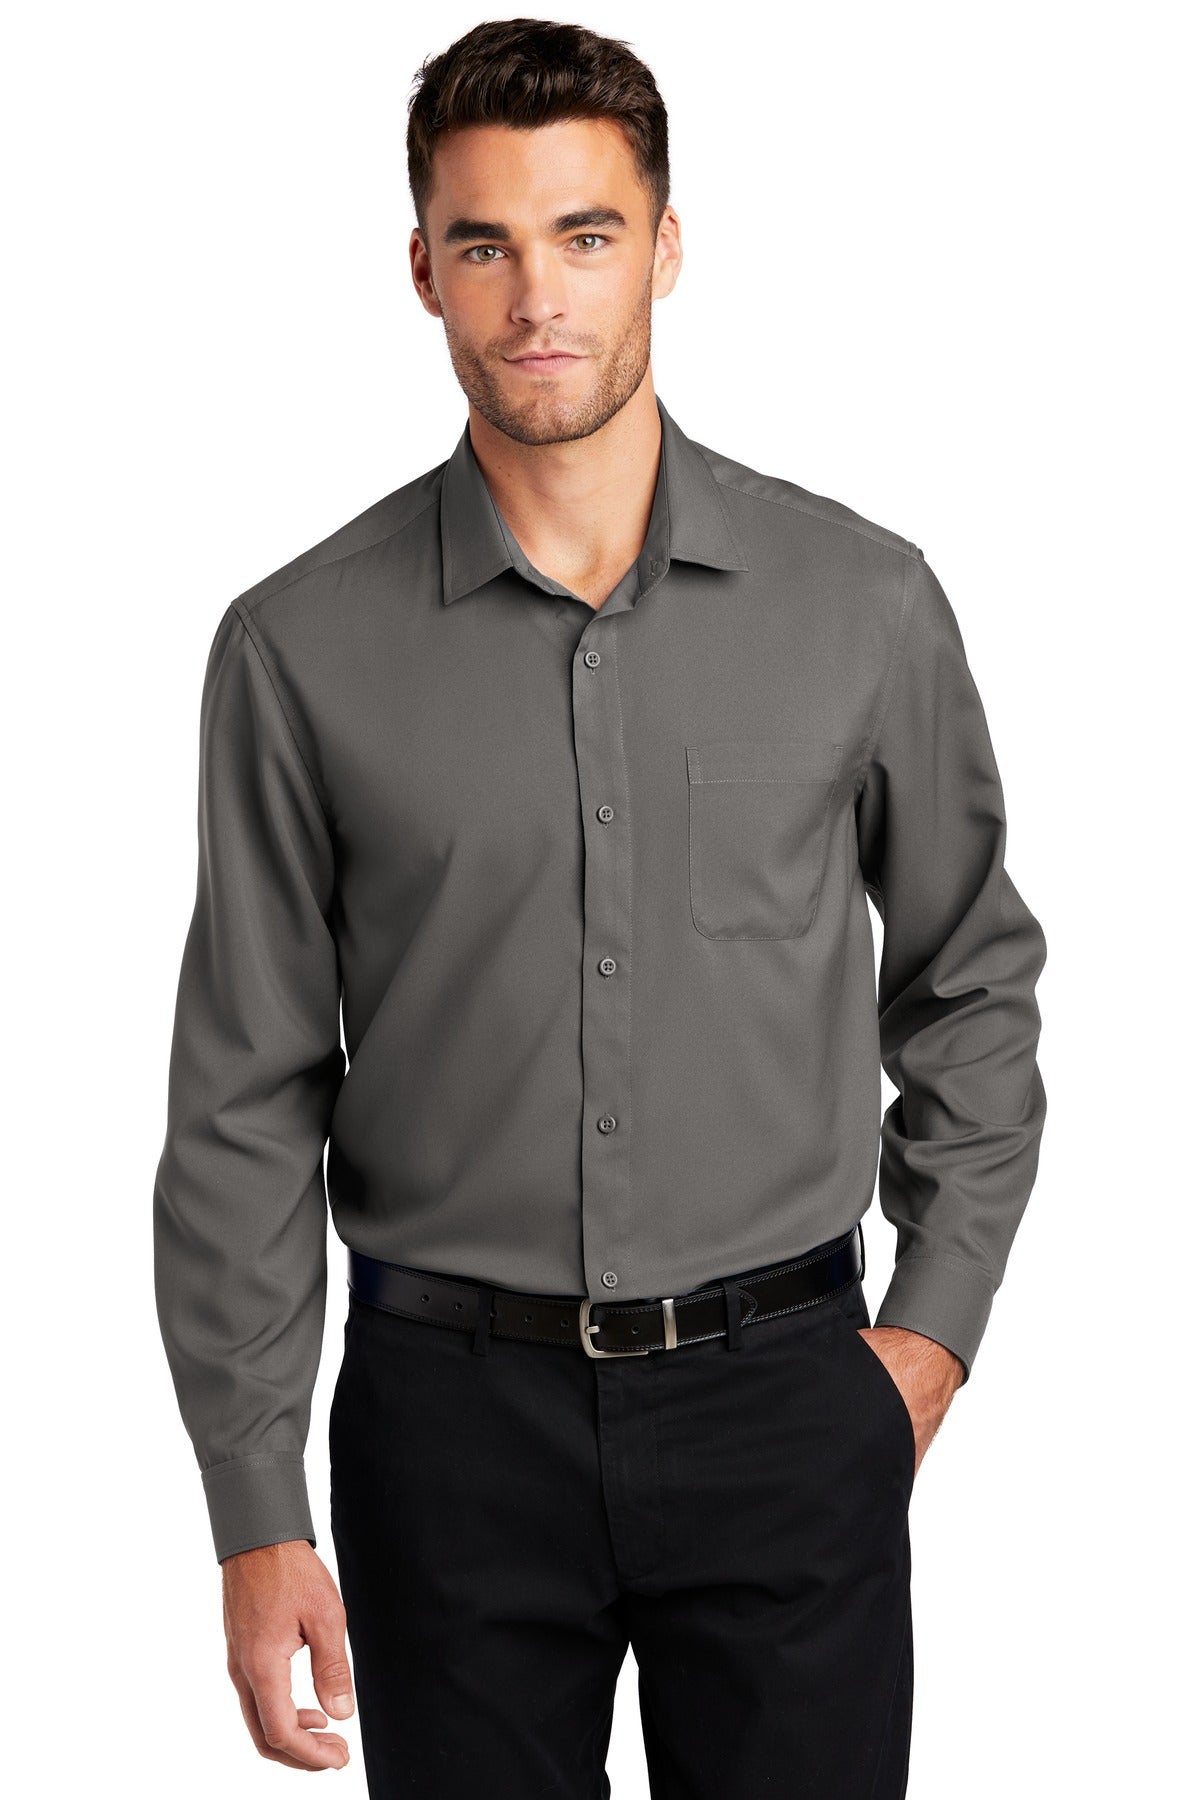 Long Sleeve Performance Staff Shirt W401